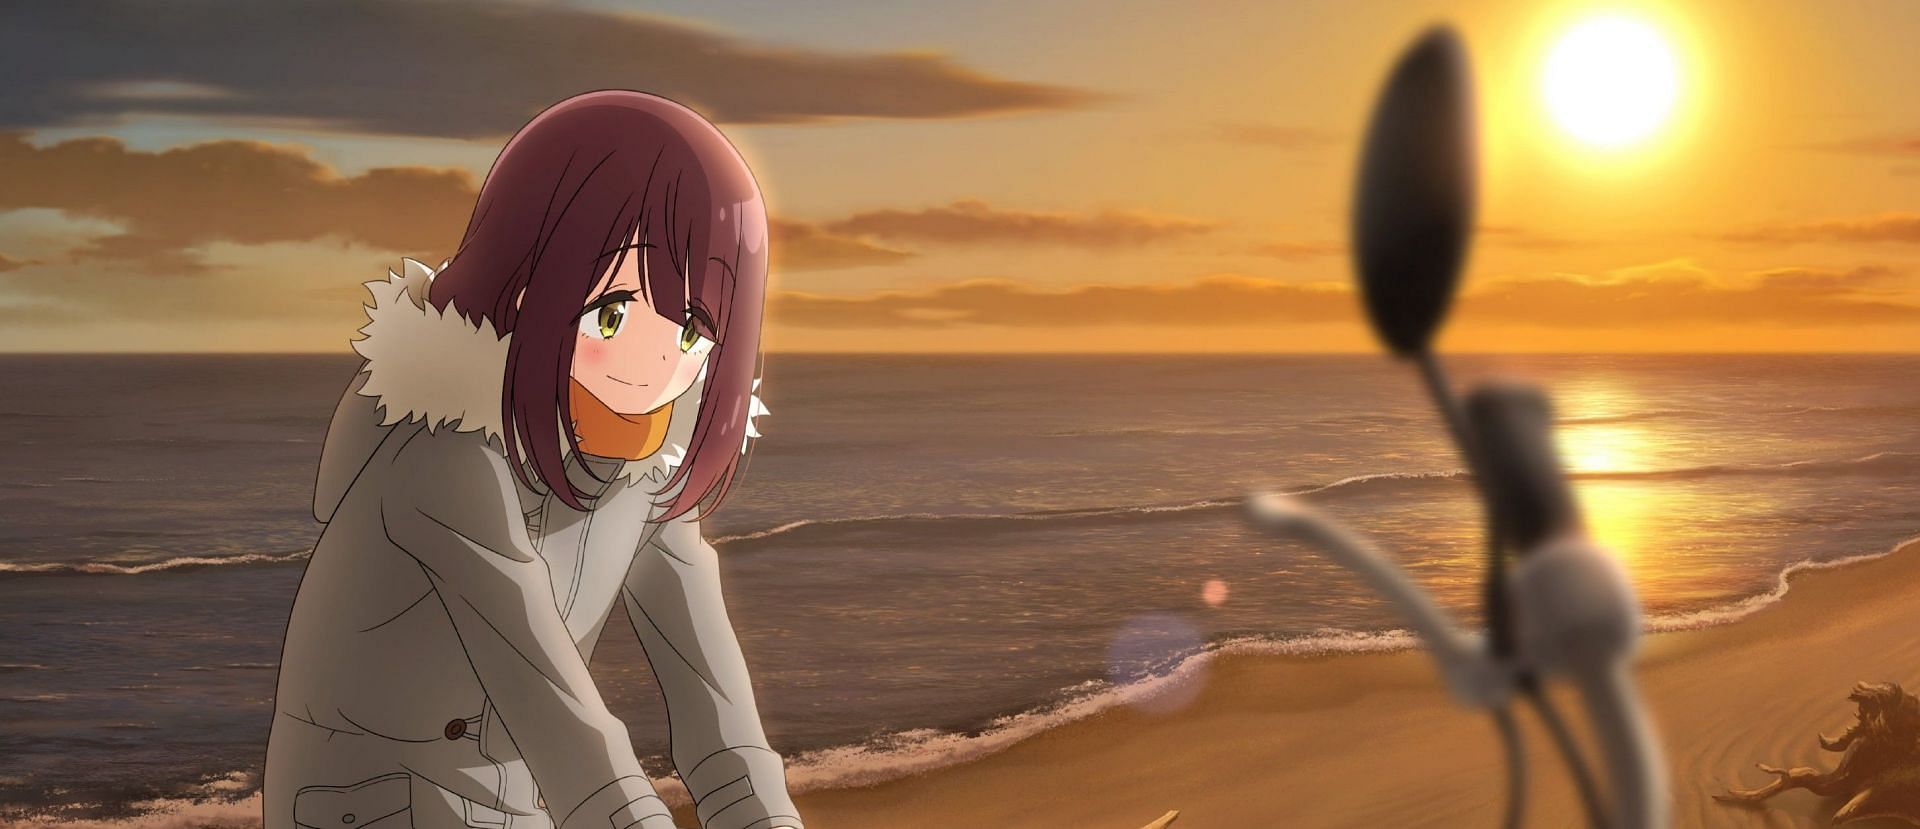 A key visual from the anime (Image via 8-Bit Studios)